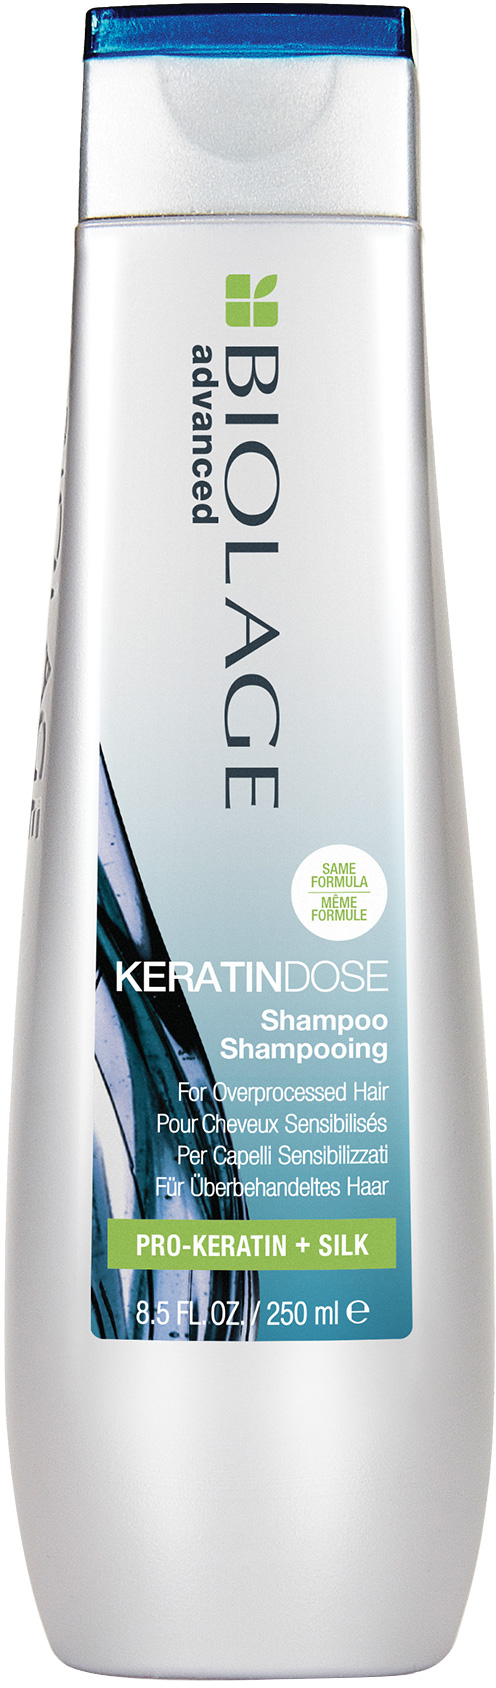 Matrix Biolage Keratindose Shampoo